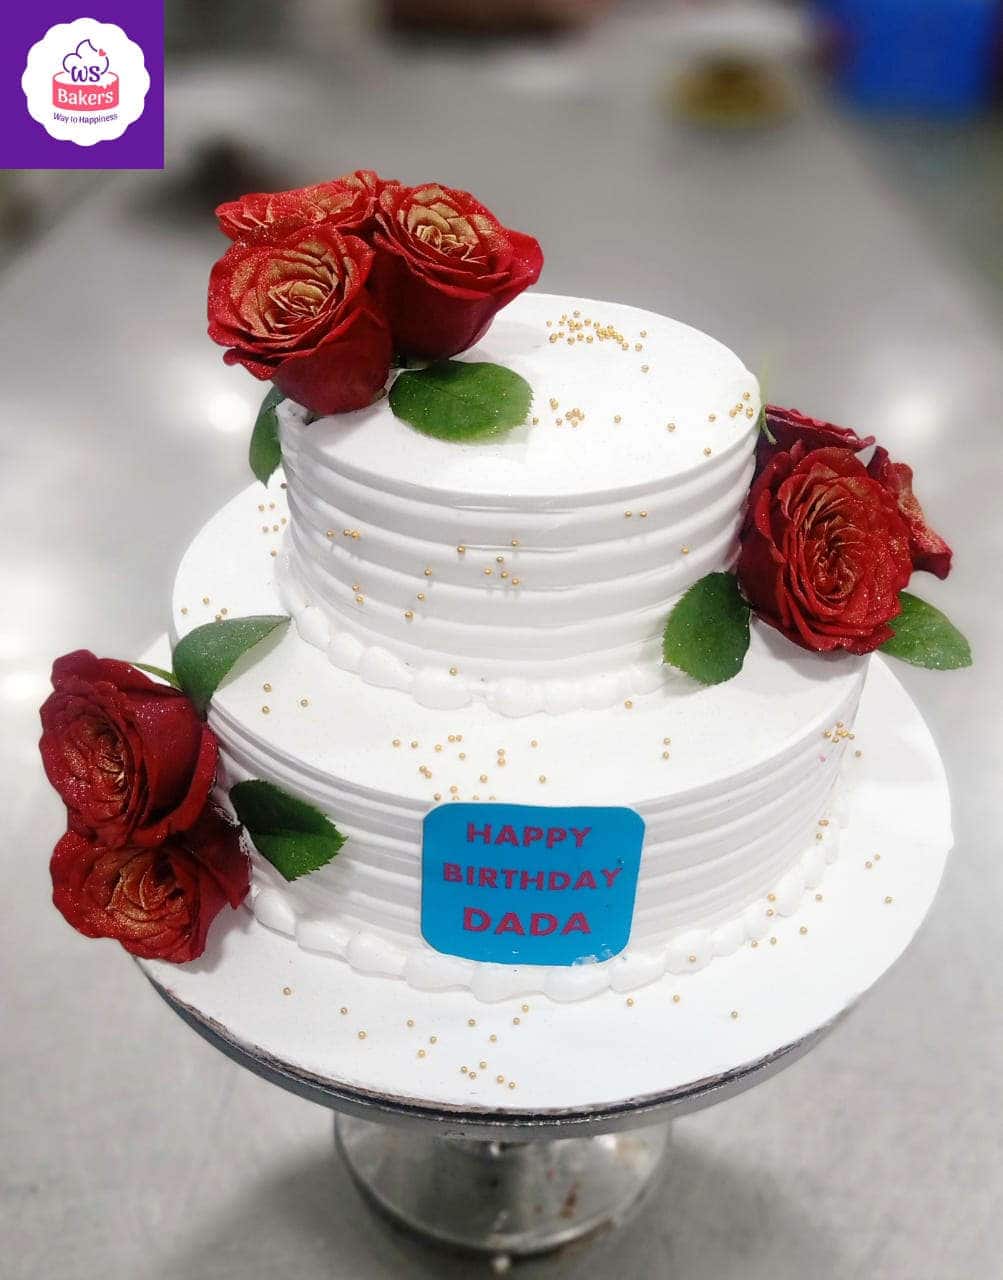 Aggregate more than 76 birthday cake dada - awesomeenglish.edu.vn